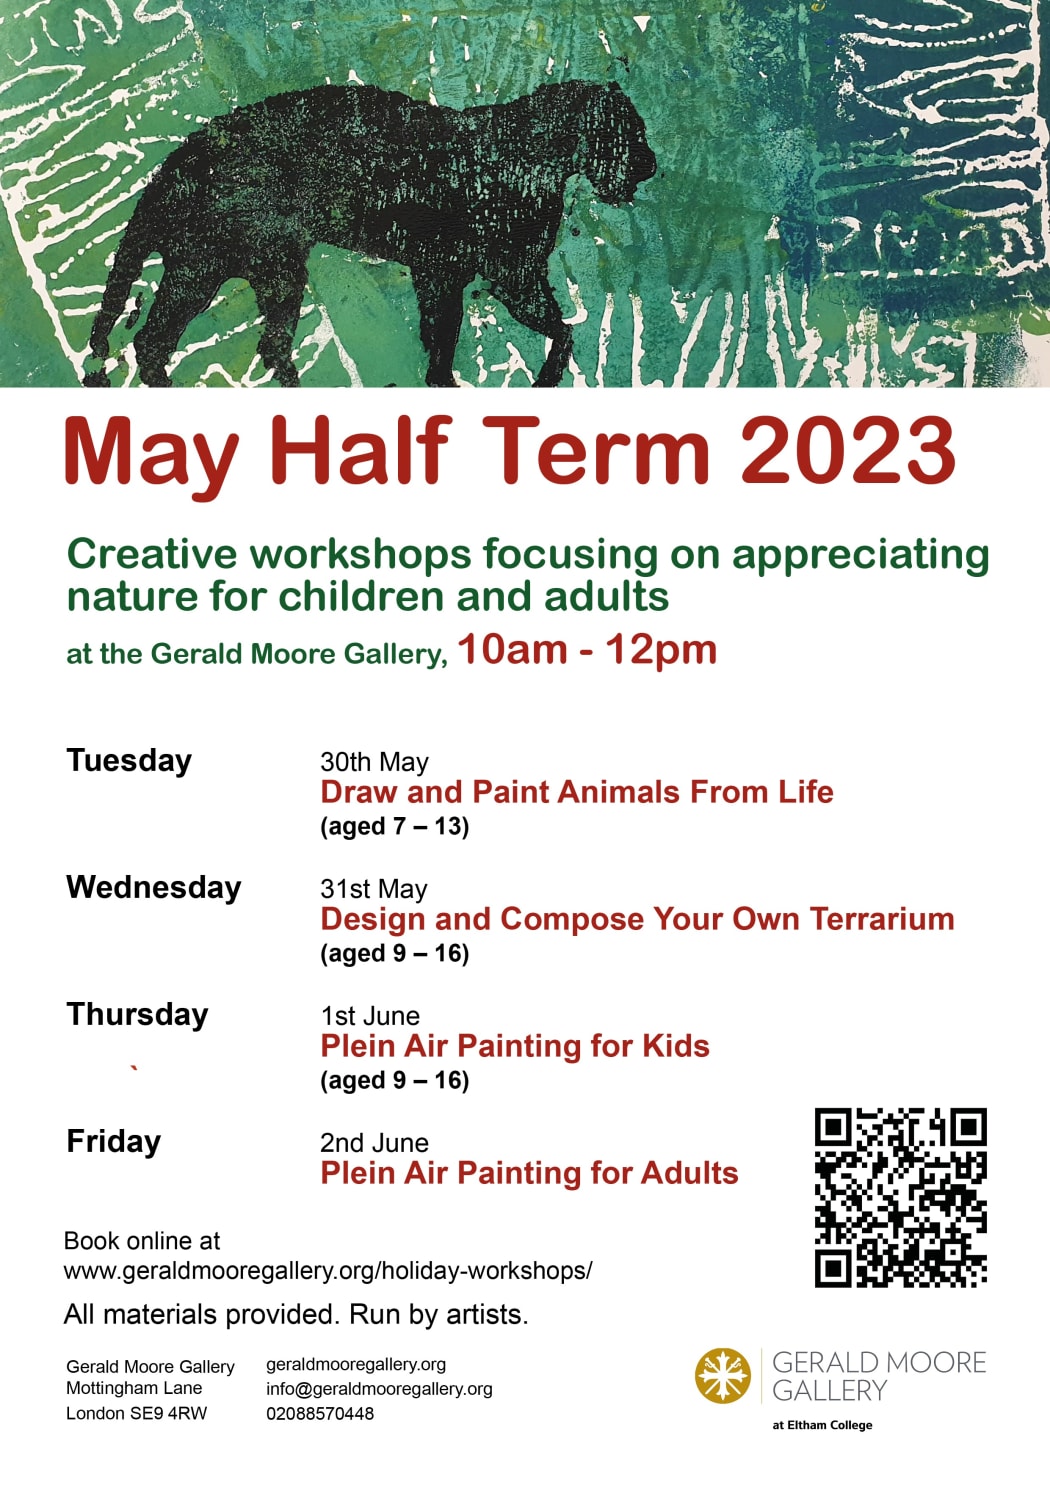 May Half Term 2023 Creative Workshops